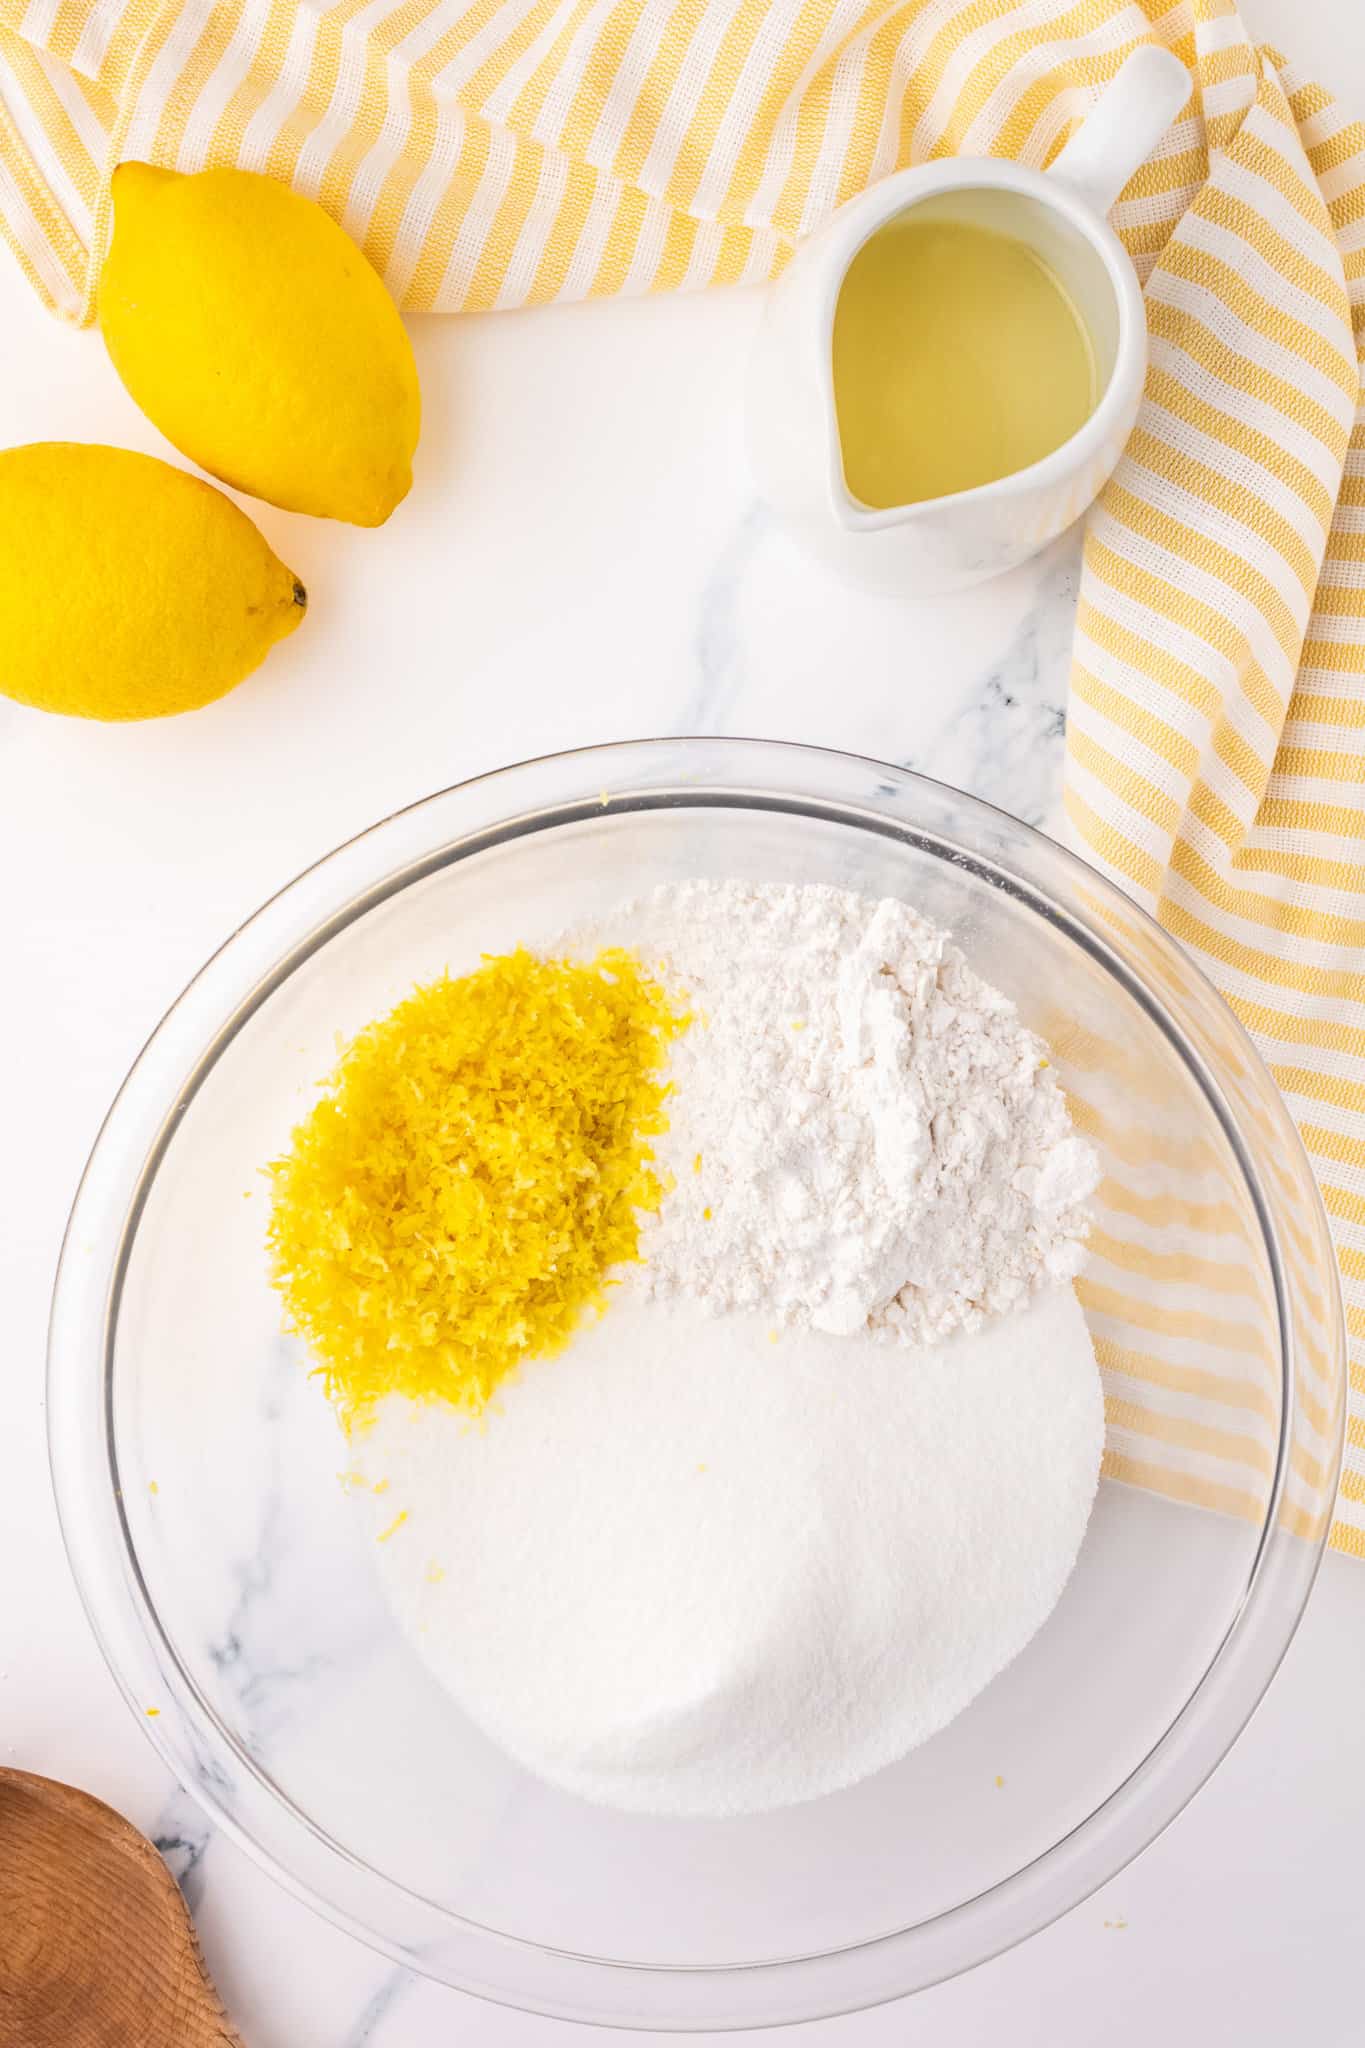 flour, granulated sugar and lemon zest in a bowl